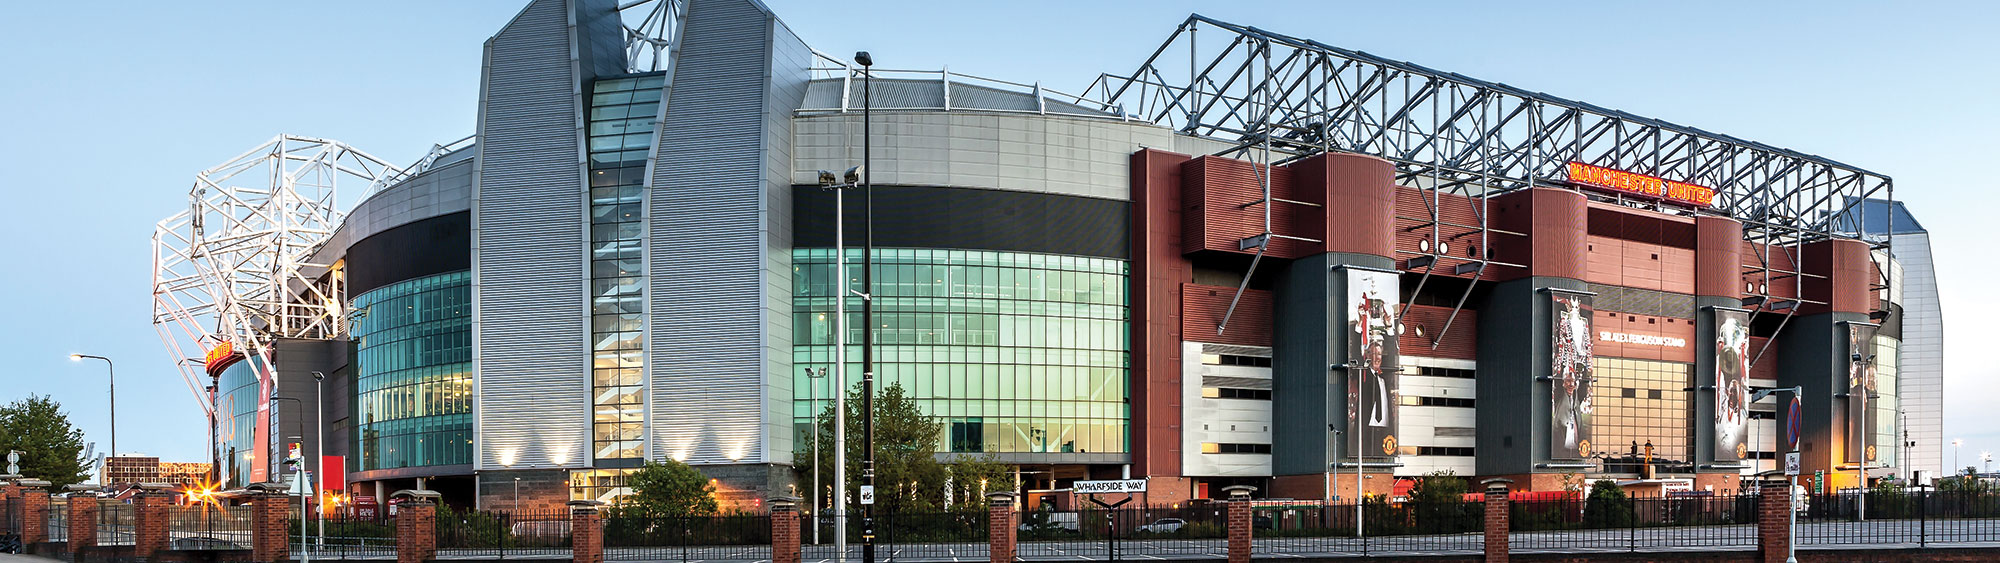 Manchester United Ground